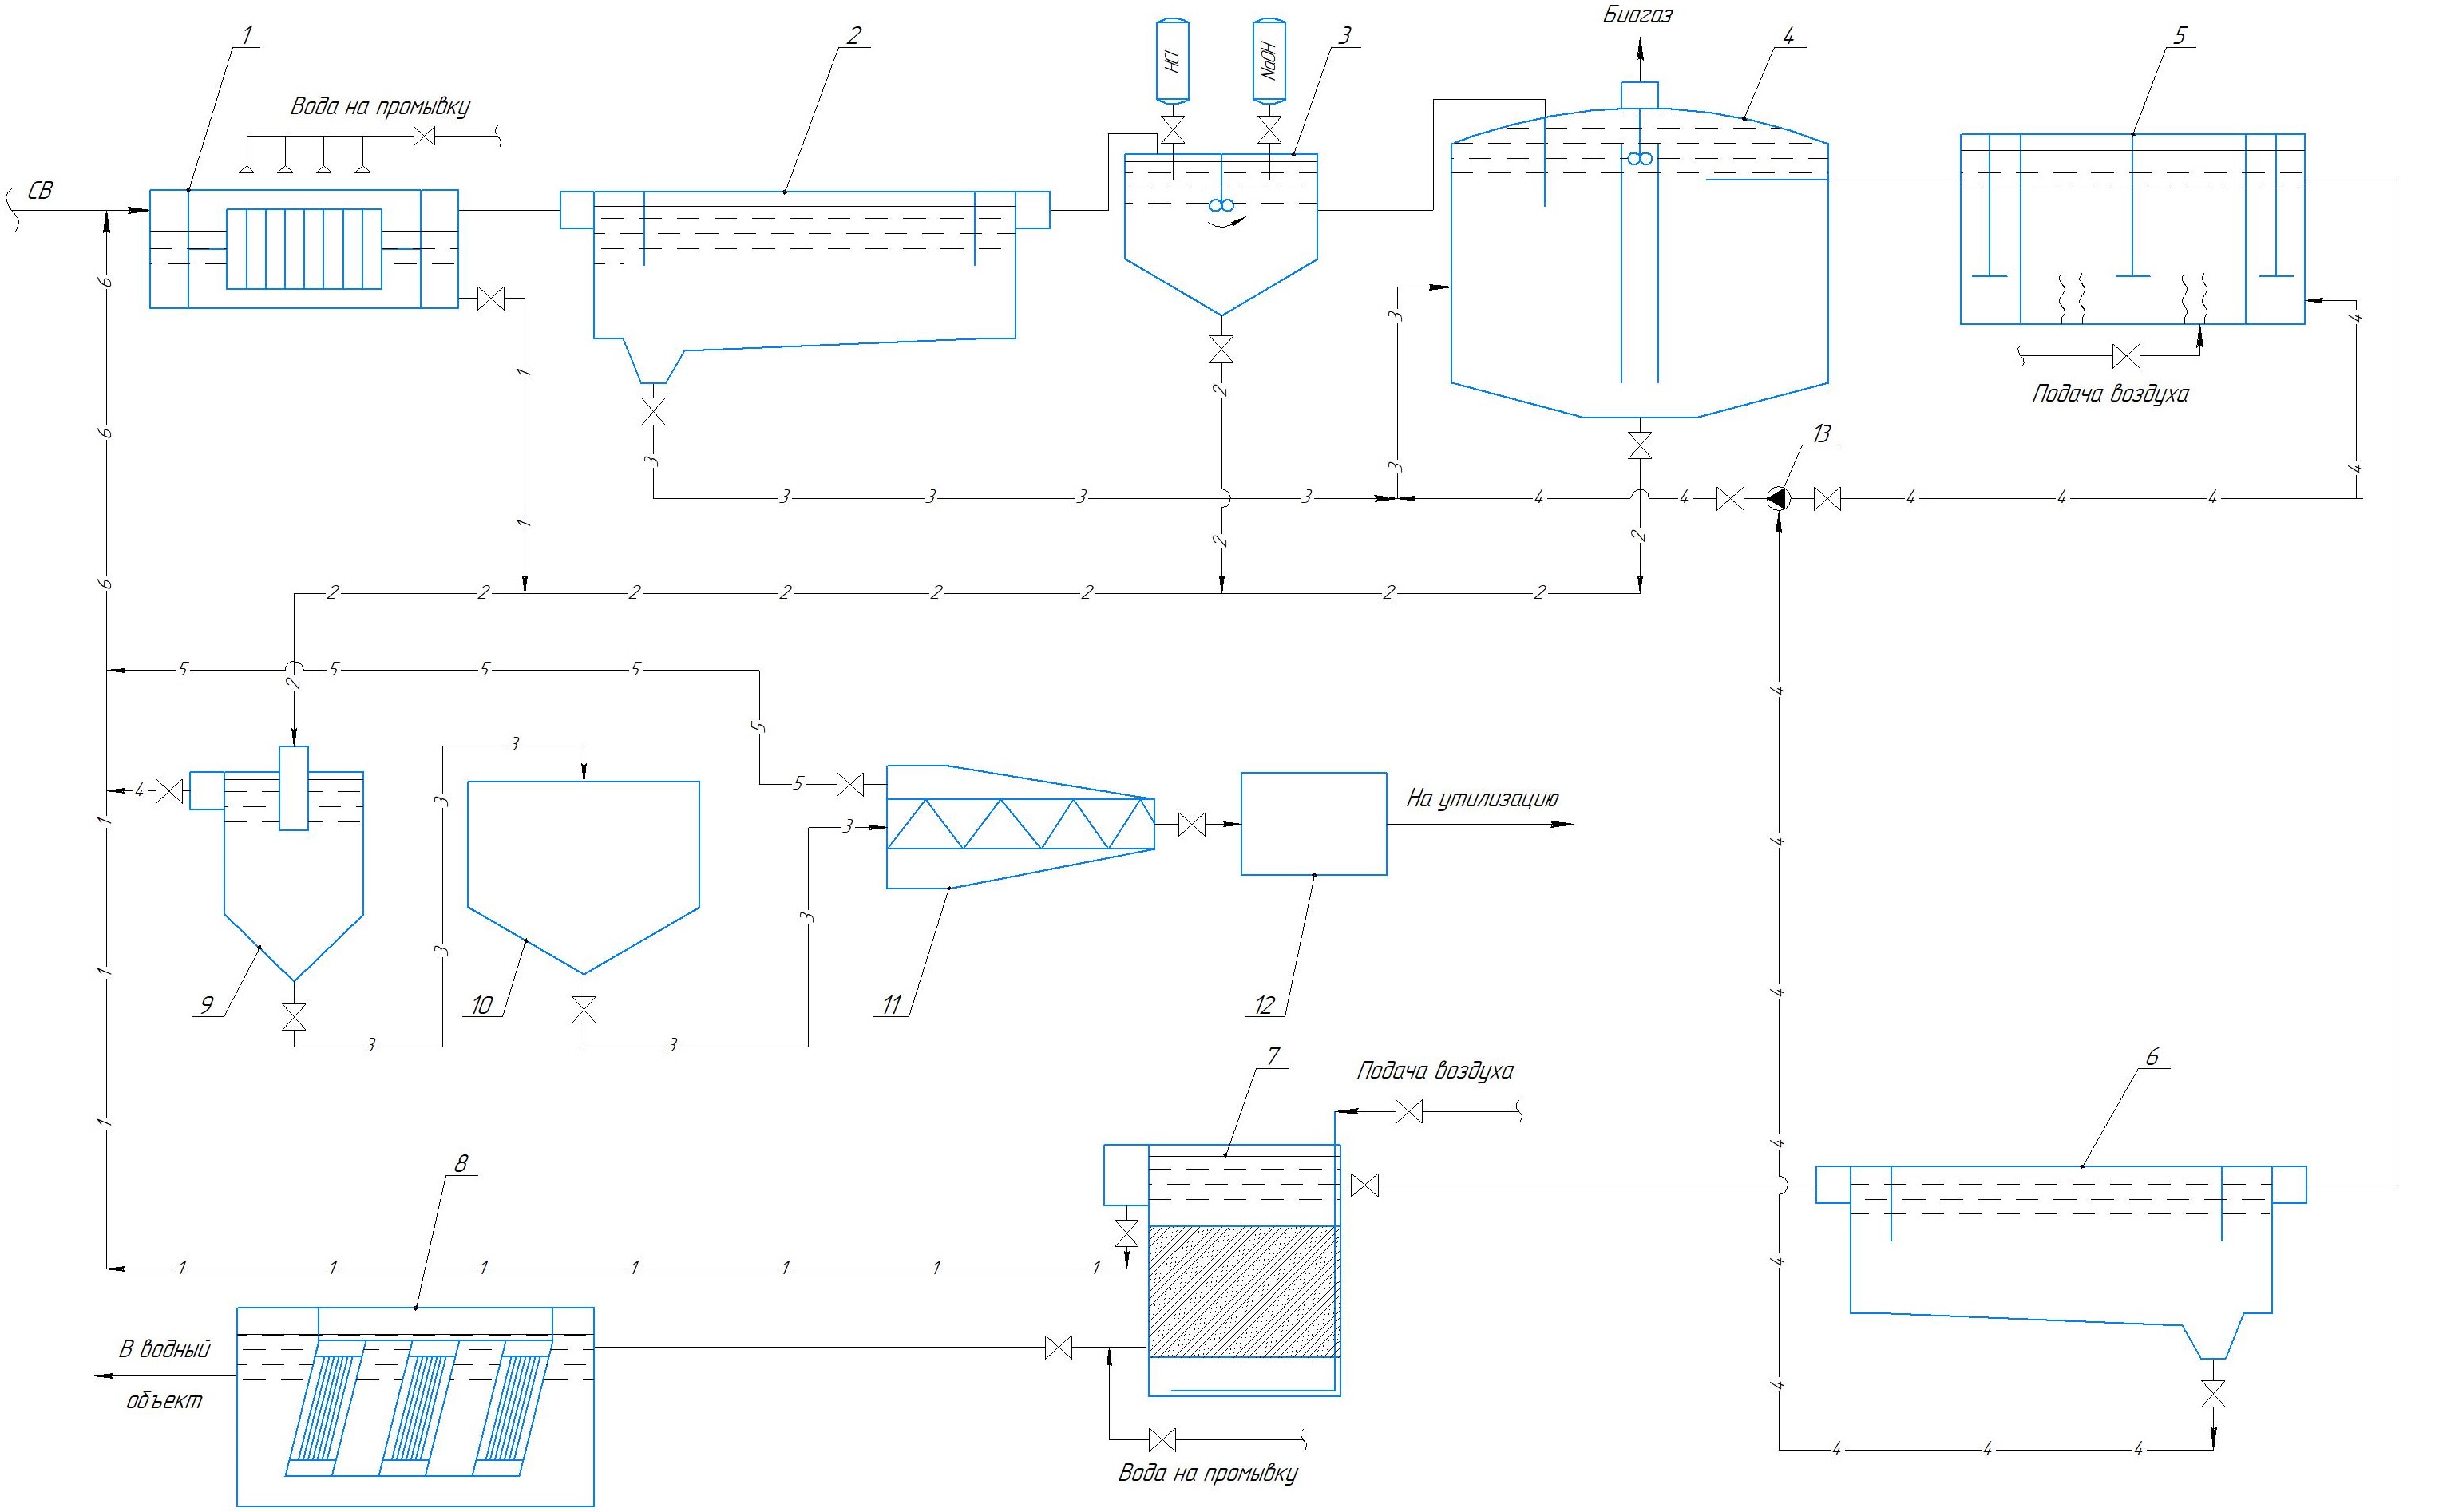 Classic Brewery Wastewater Treatment Scheme: 1 - drum mesh; 2 - primary horizontal settler; 3 - CB neutralization unit; 4 - methane tank; 5 - aerotank displacer; 6 - secondary horizontal settler; 7 - frame-and-fill filter; 8 - UV unit; 9 - precipitator; 10 - sludge accumulator; 11 - centrifuge; 12 - cake sludge accumulator; 13 - sludge pump